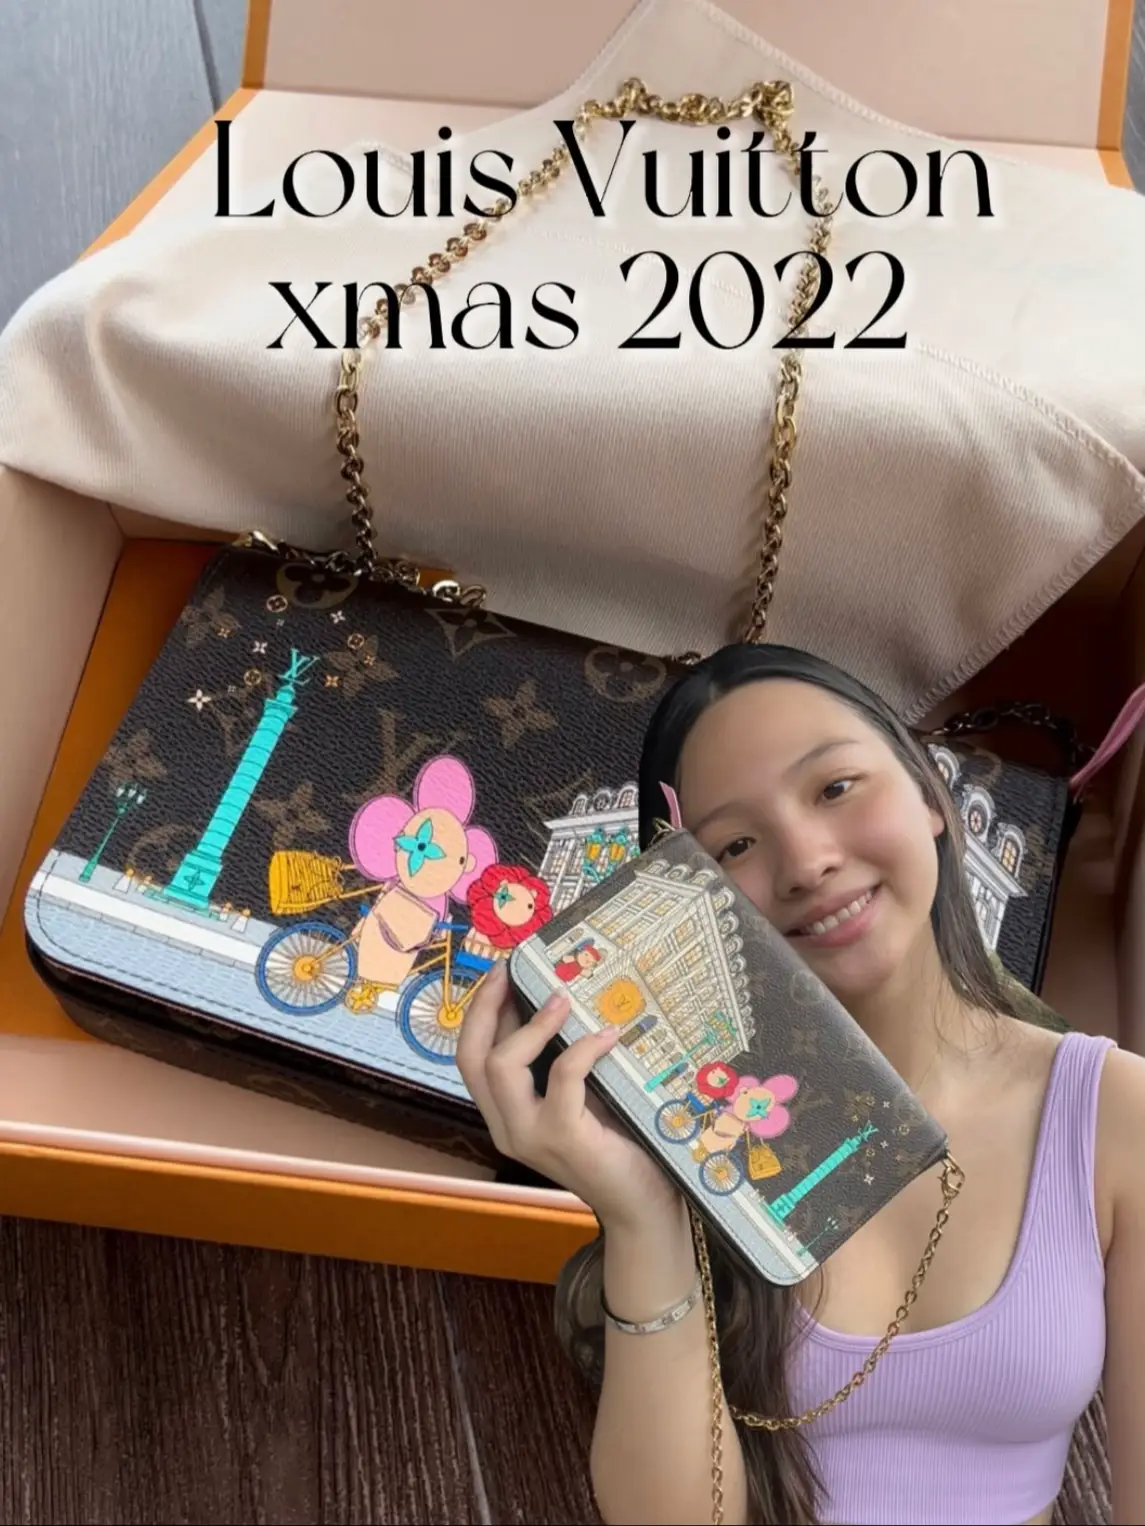 Louis Vuitton Christmas ad 2022